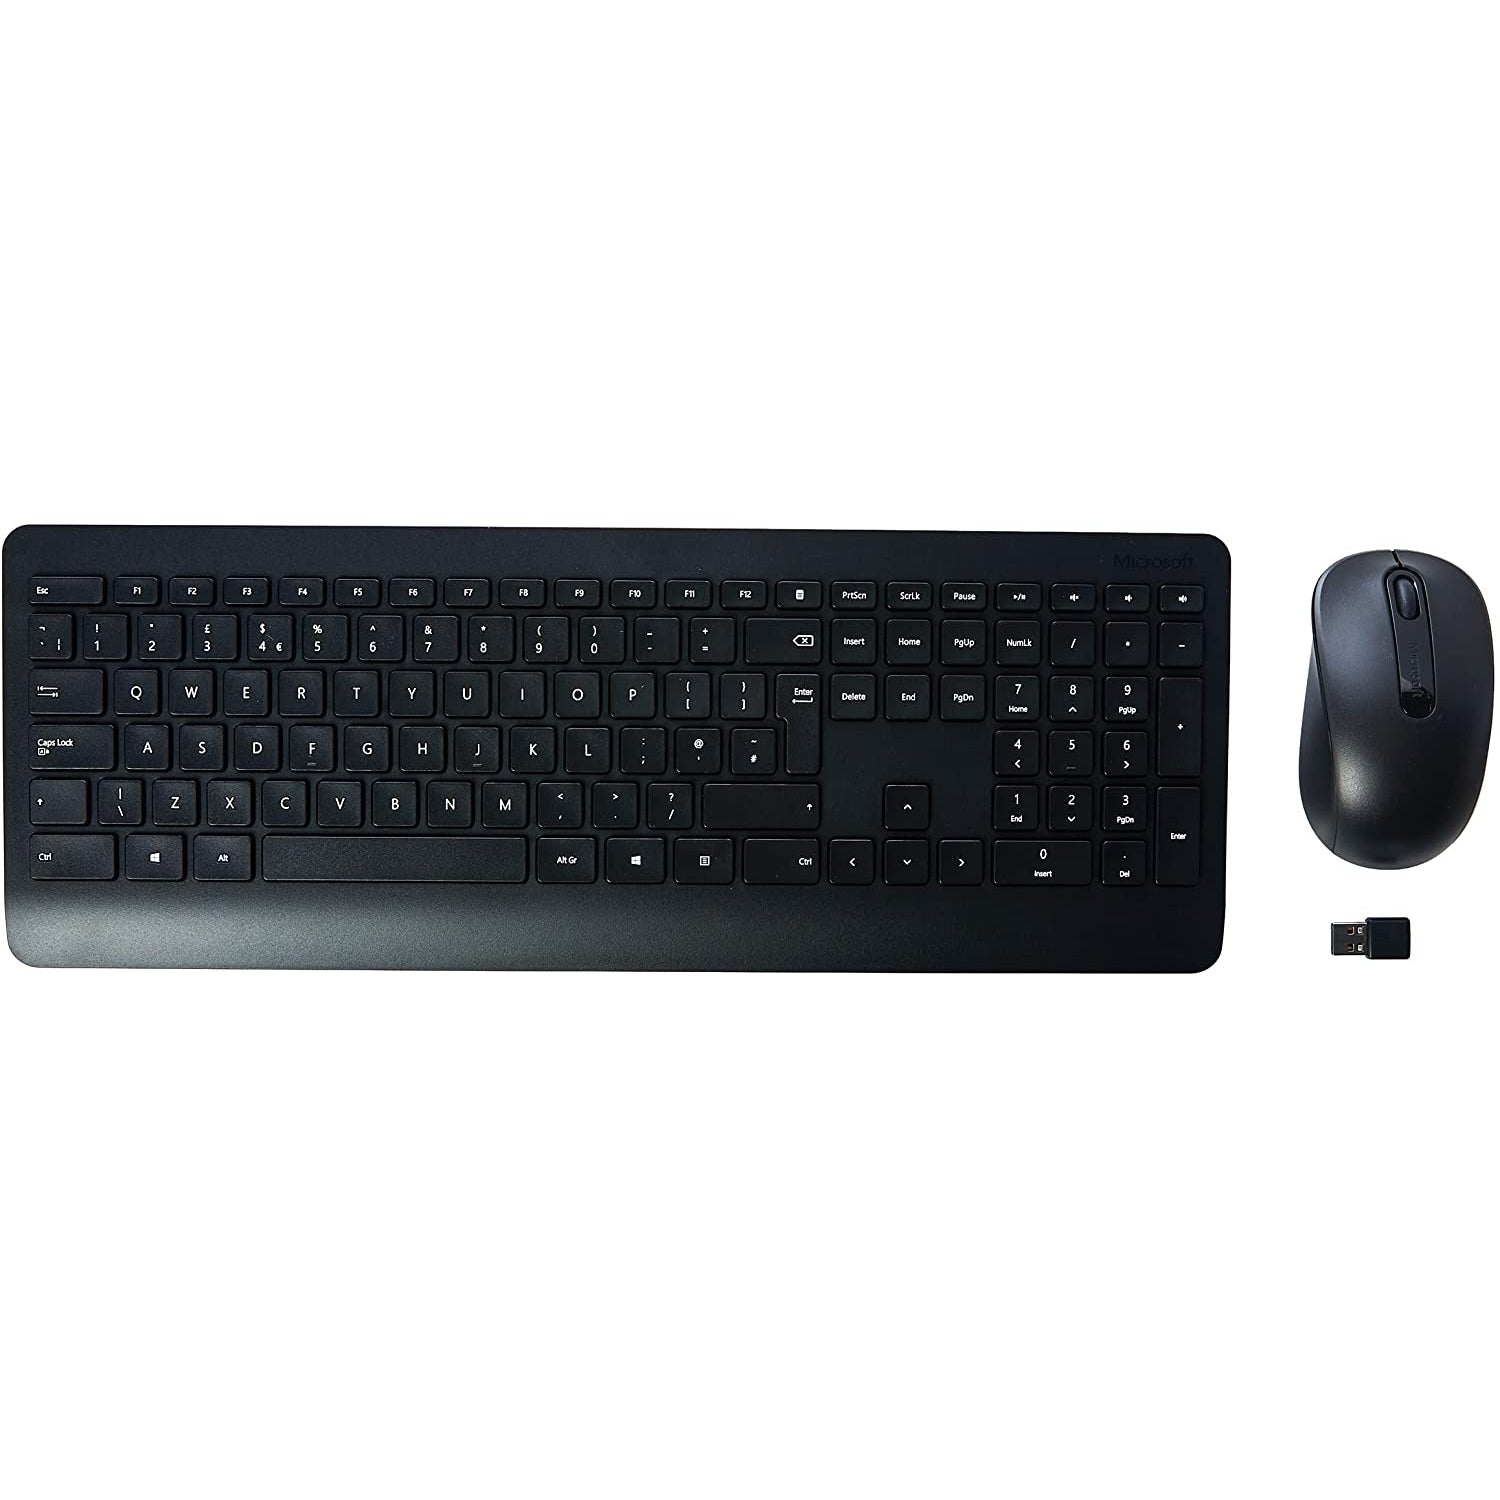 Microsoft Wireless Desktop 900 Keyboard and Mouse - Pristine